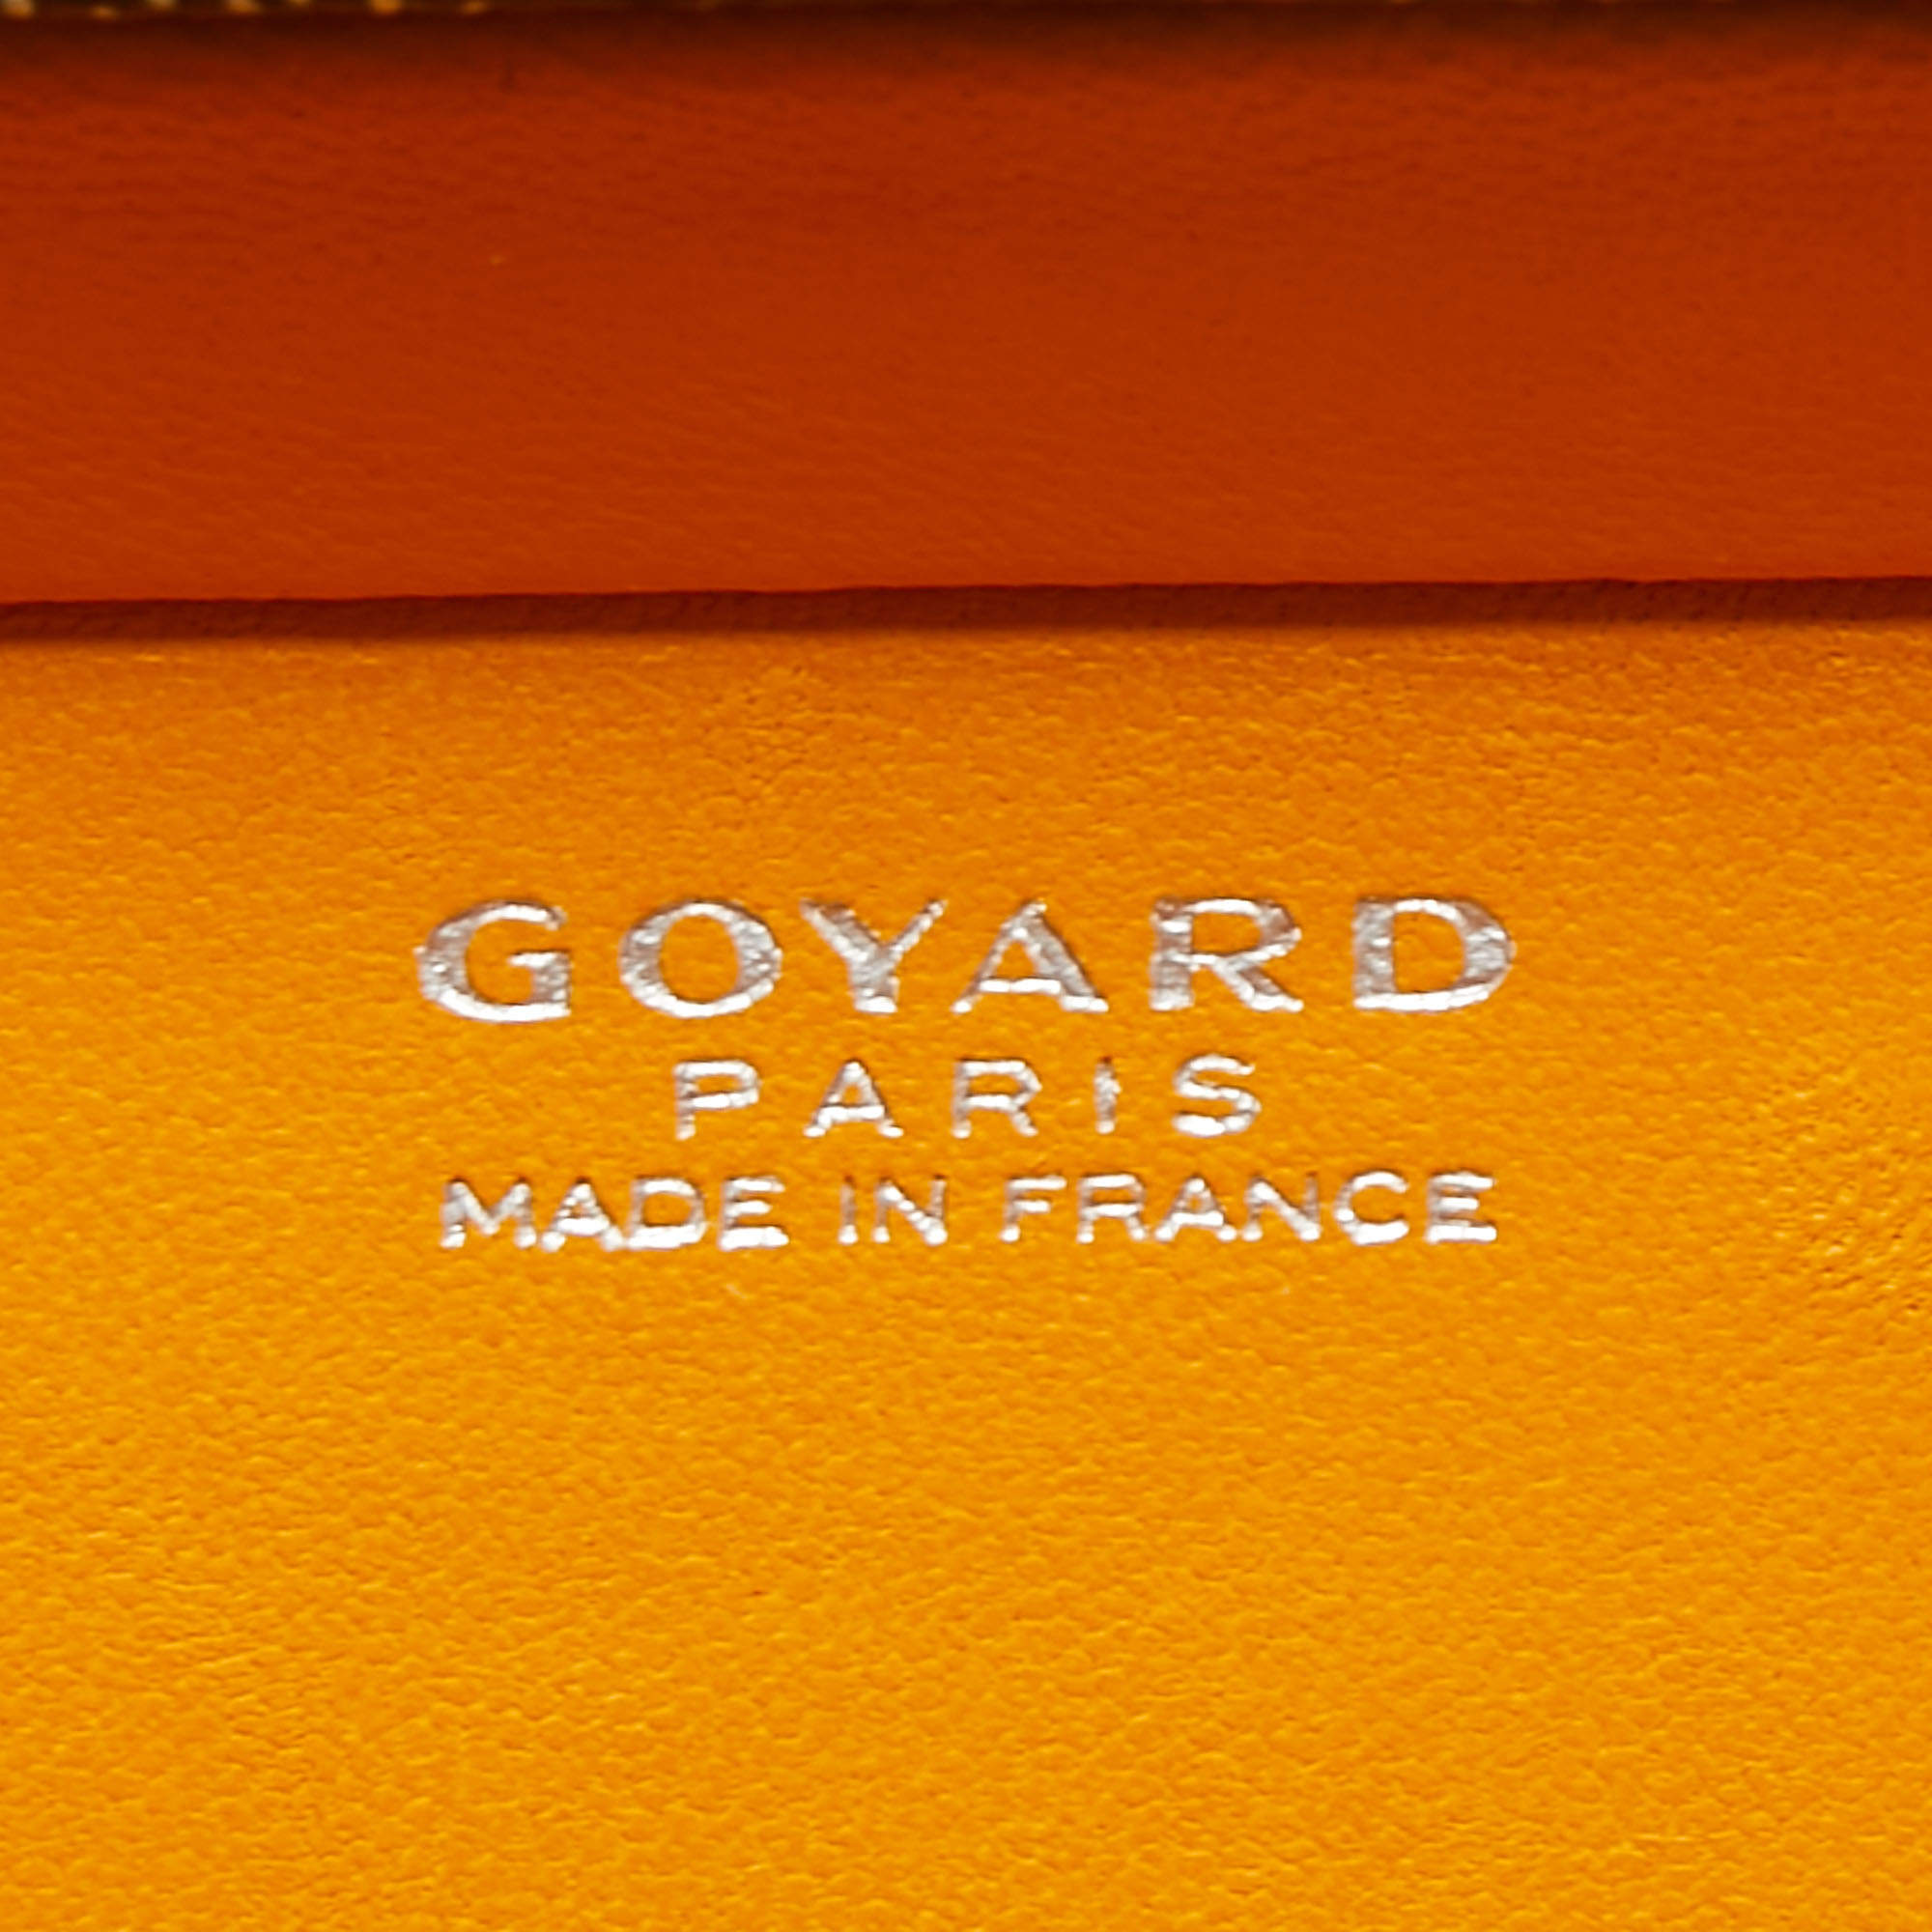 Vendôme leather handbag Goyard Black in Leather - 27673296